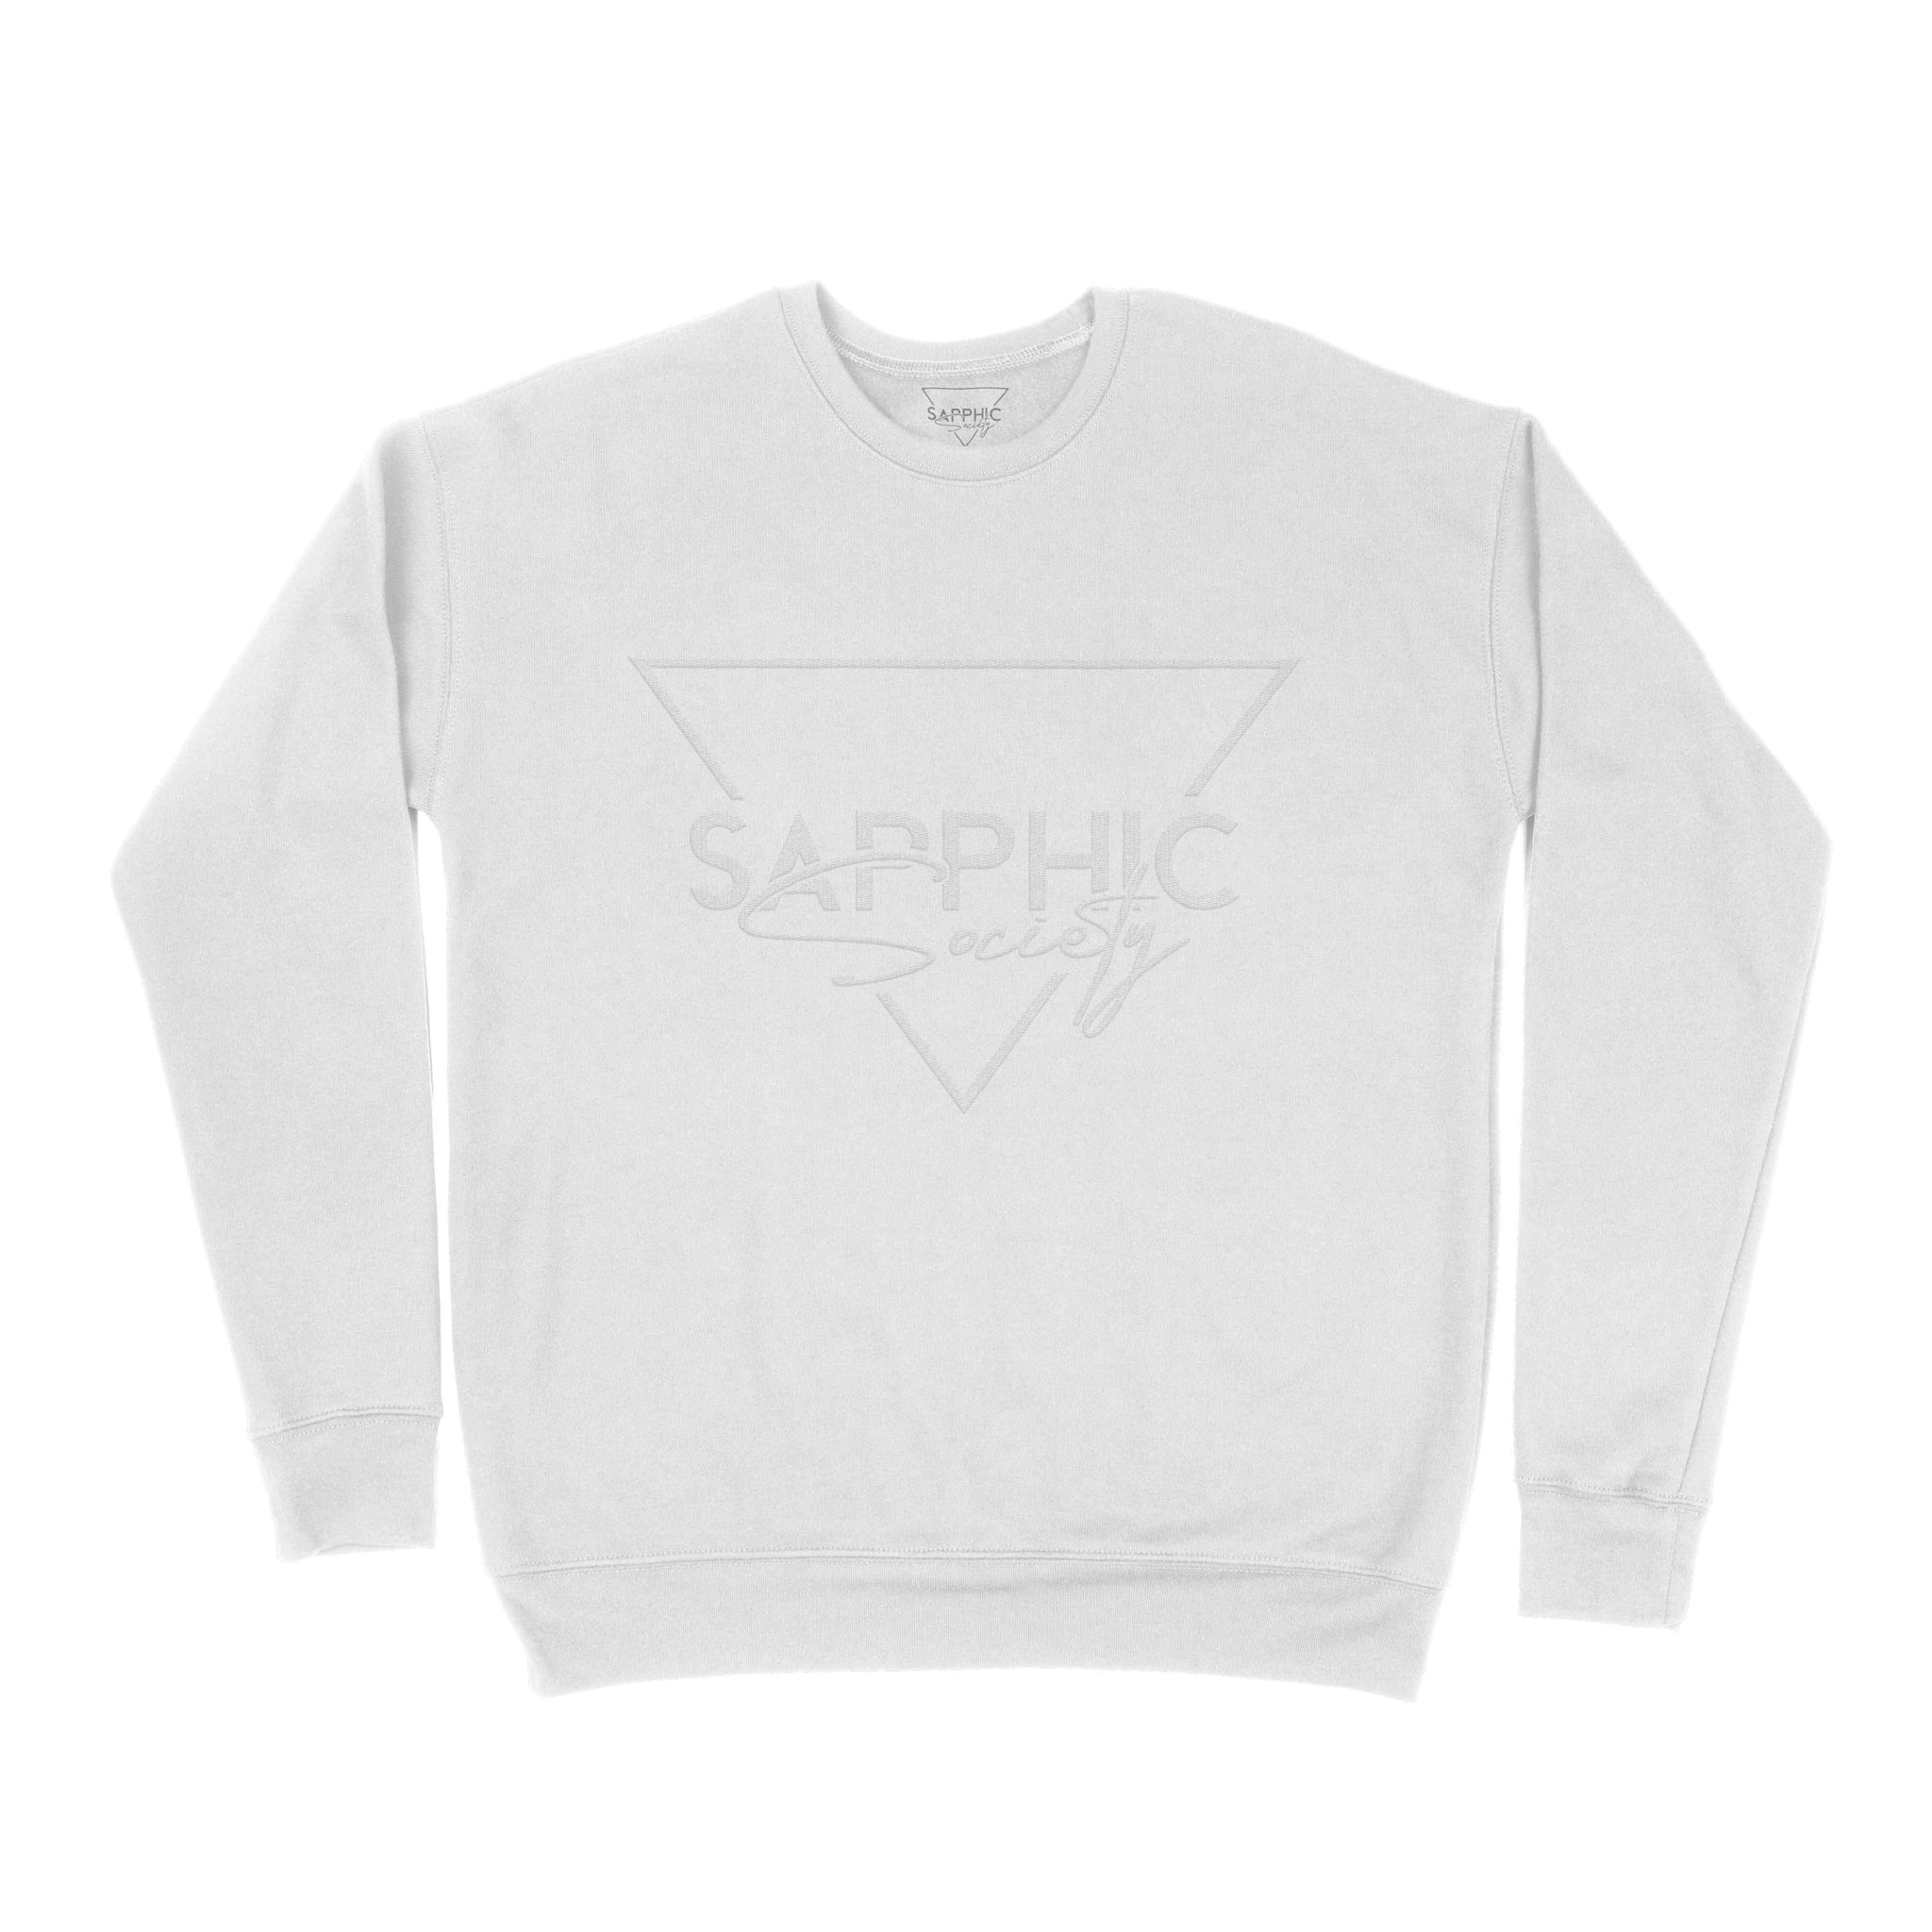 White Embroidered Sweatshirt - Sapphic Society